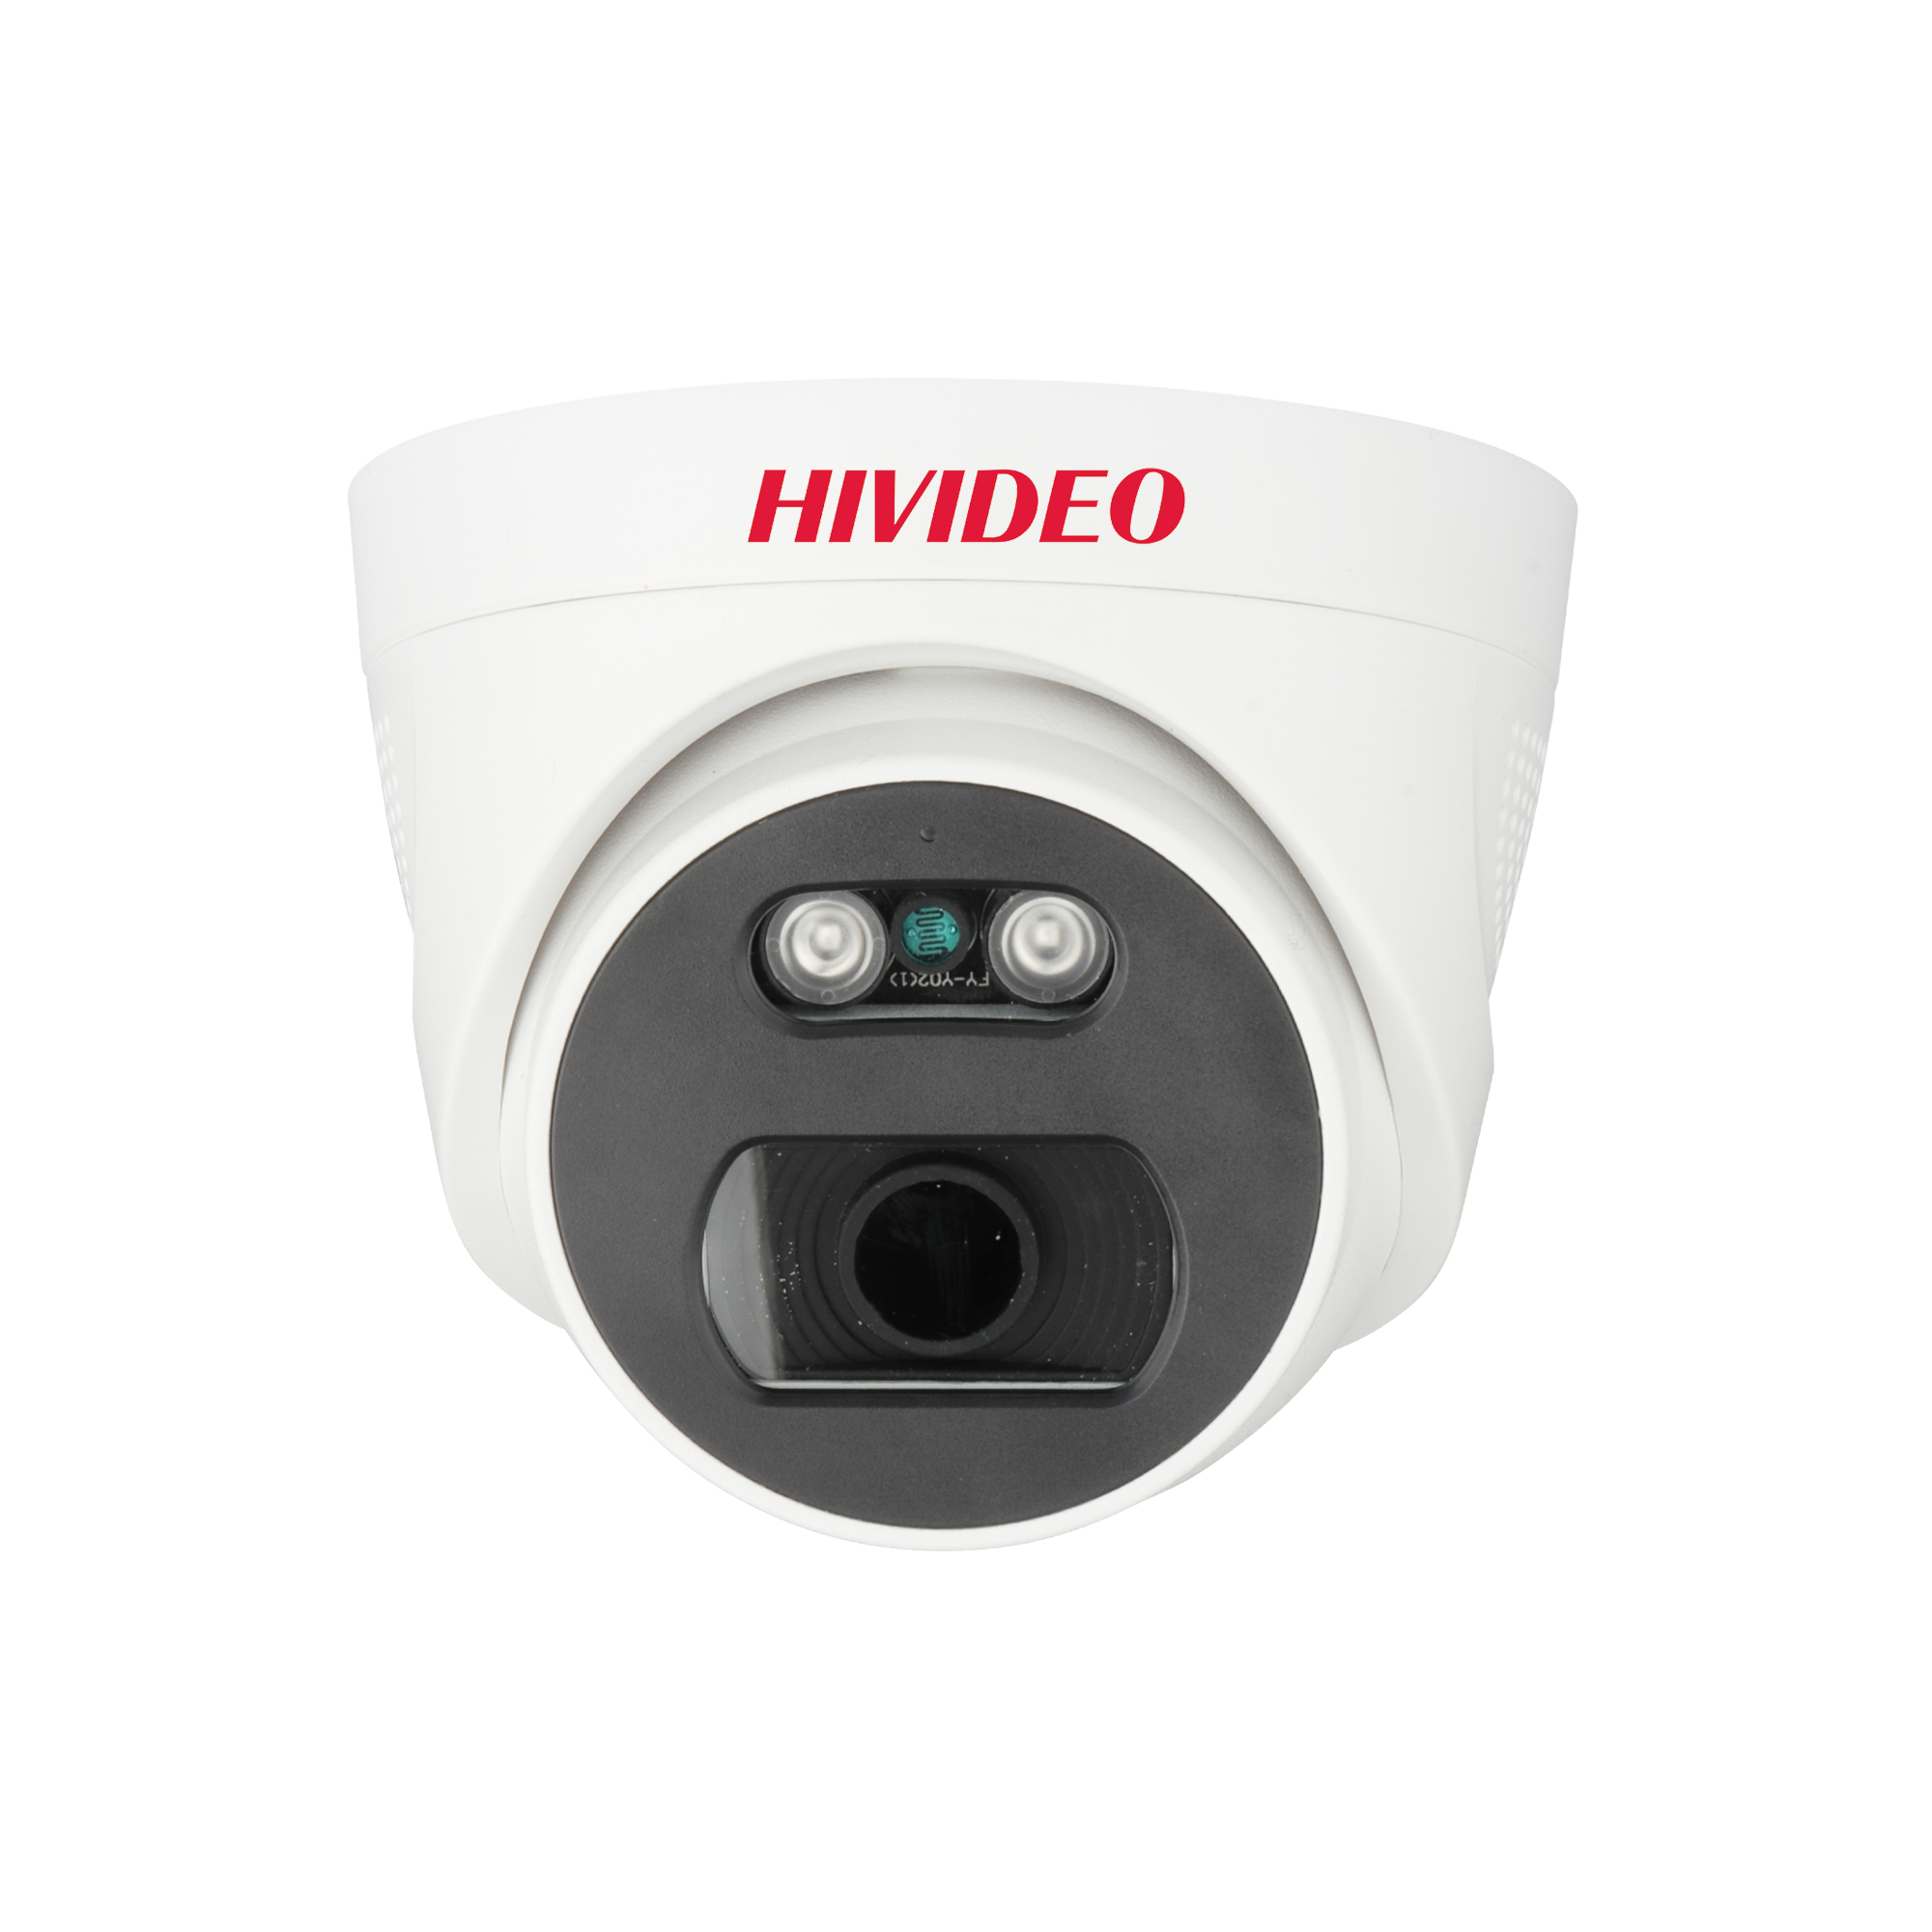 دوربین مدار بسته دام HIVIDEO مدل HI-D73613